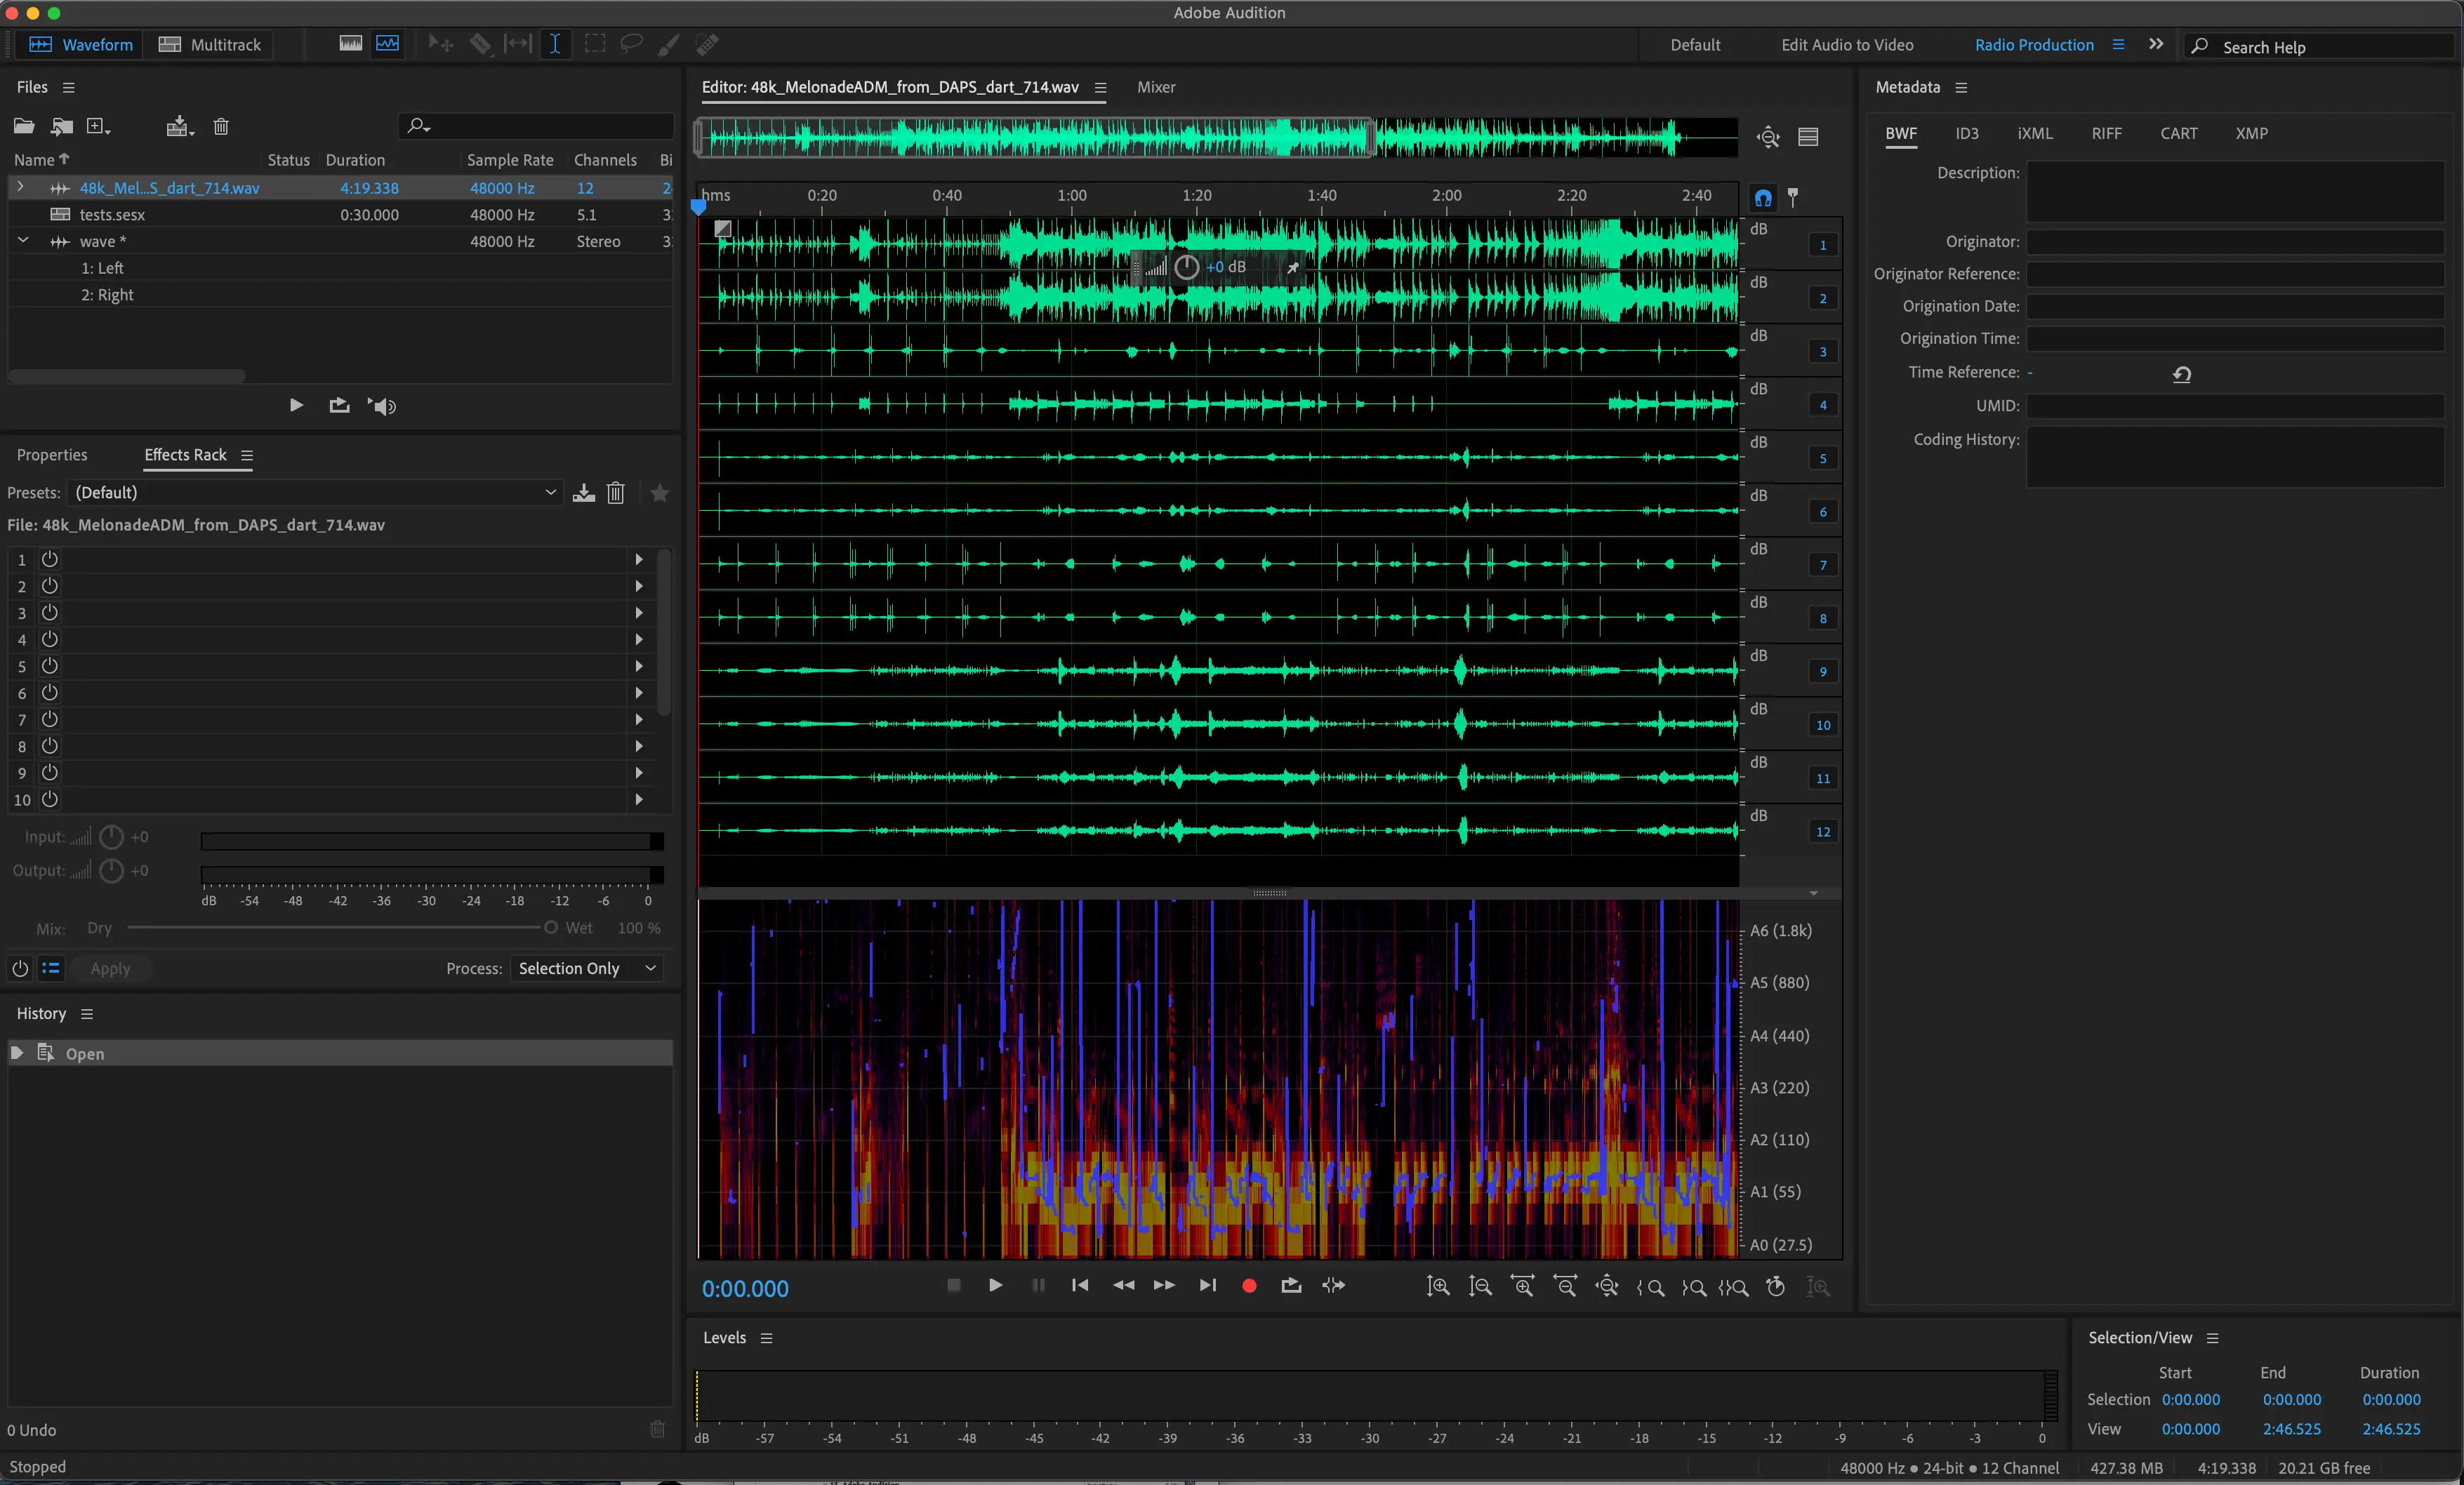 Adobe Audition Waveform view showing spectrum analysis. 